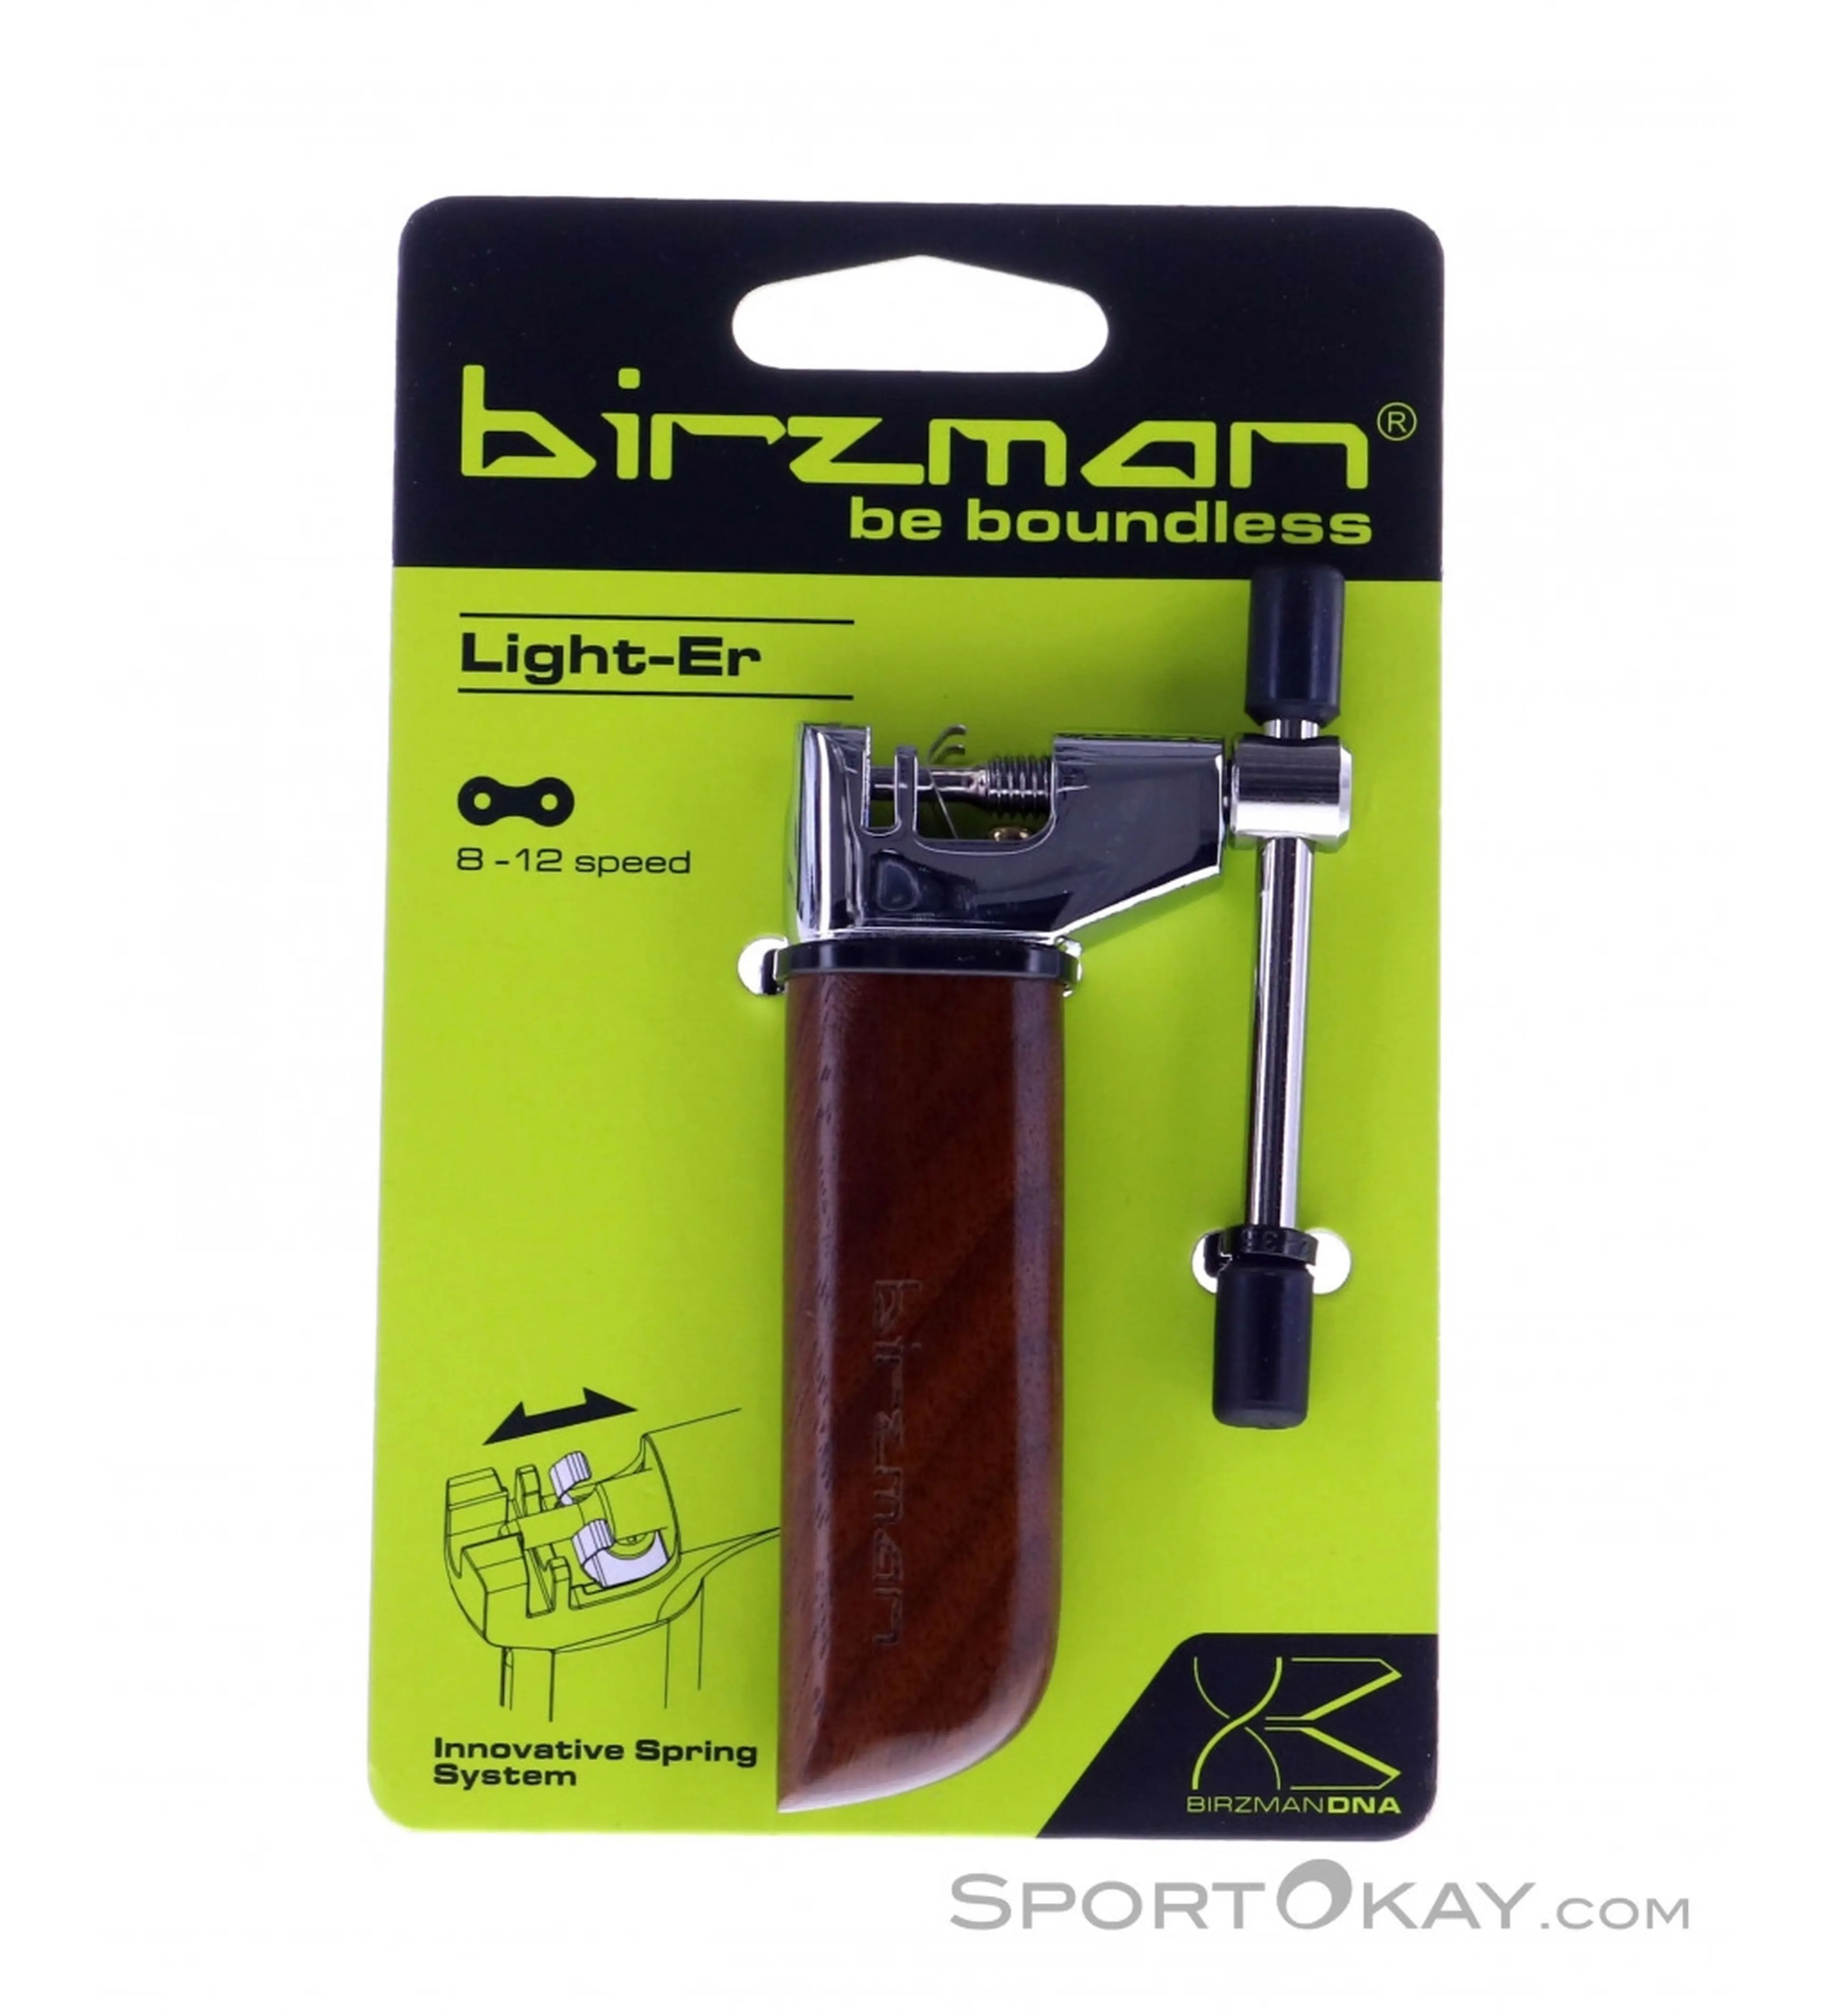 Image Birzman Light-Er chain tool  8- 12 speed lant bicicleta